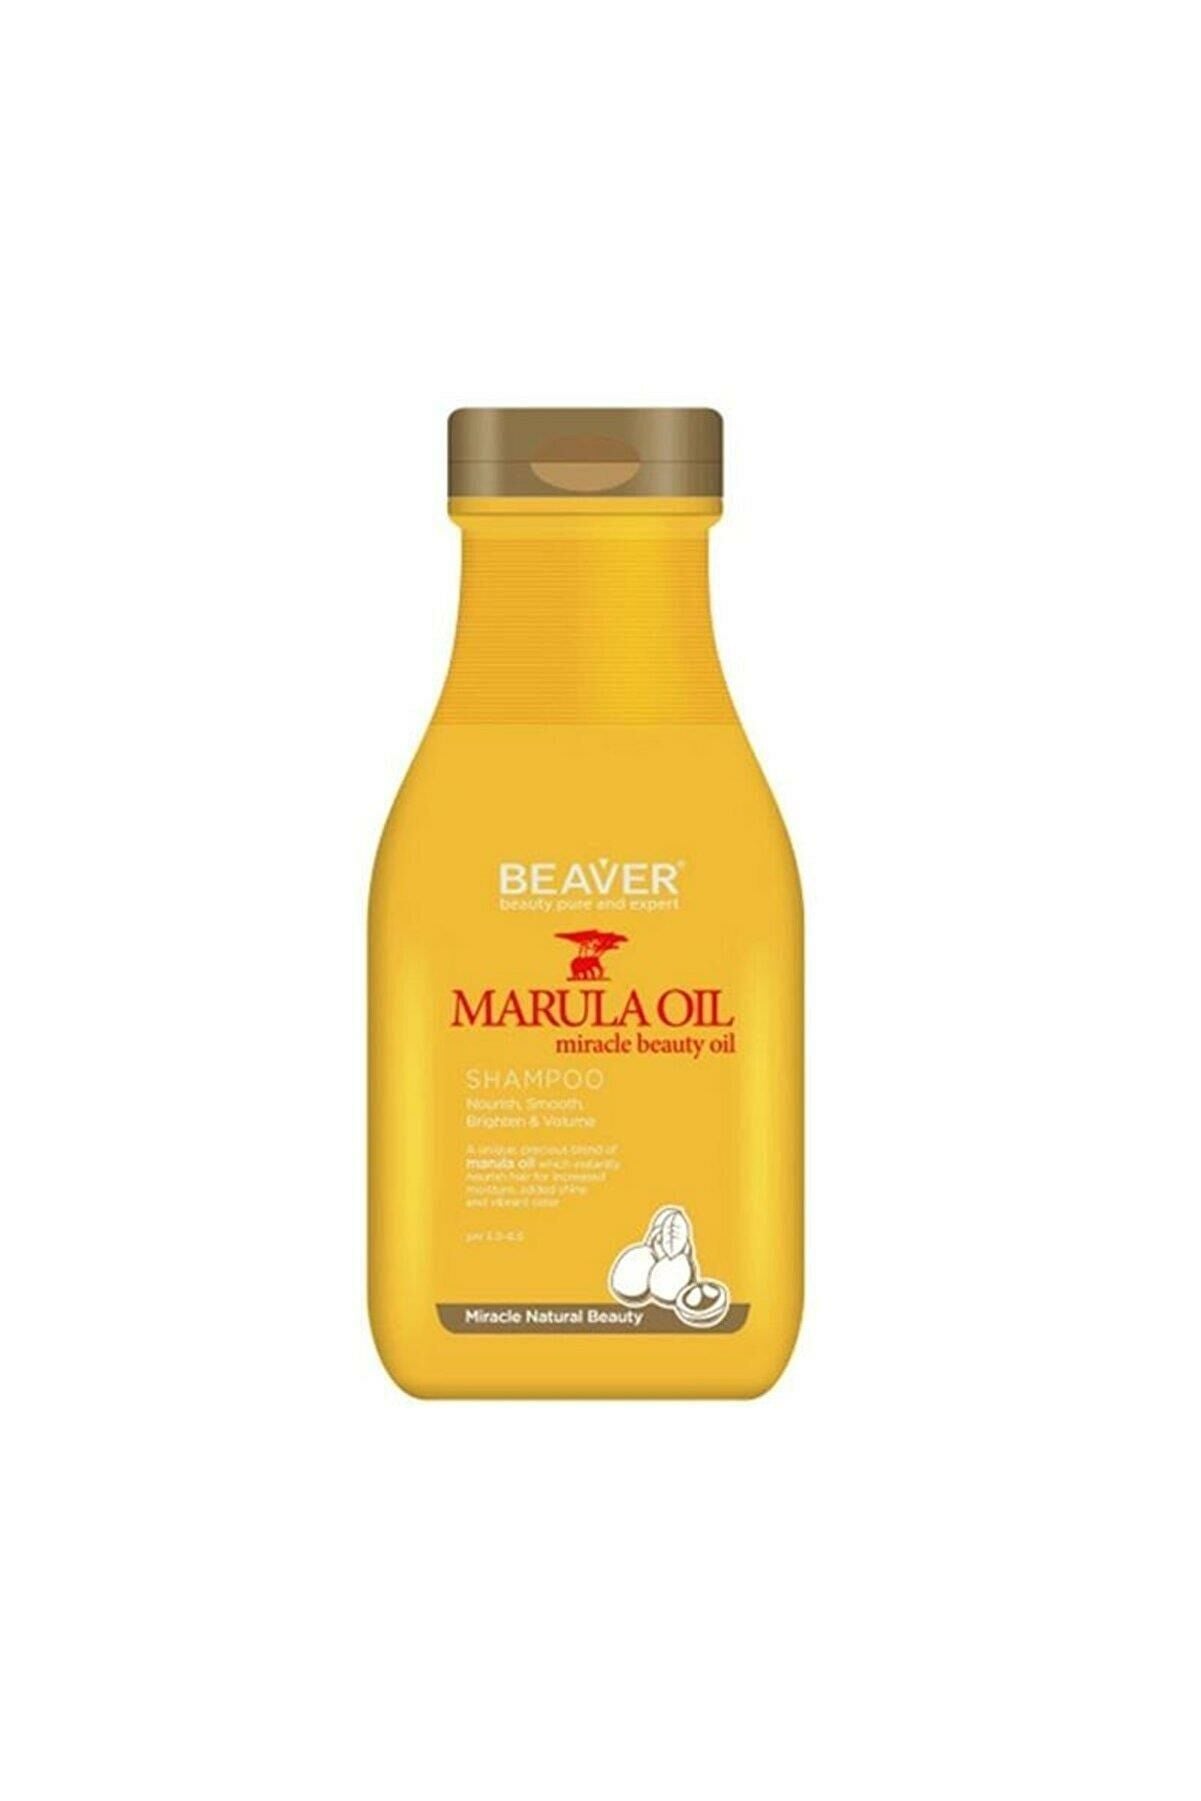 Beaver Marula Oil Shampoo 60 ml